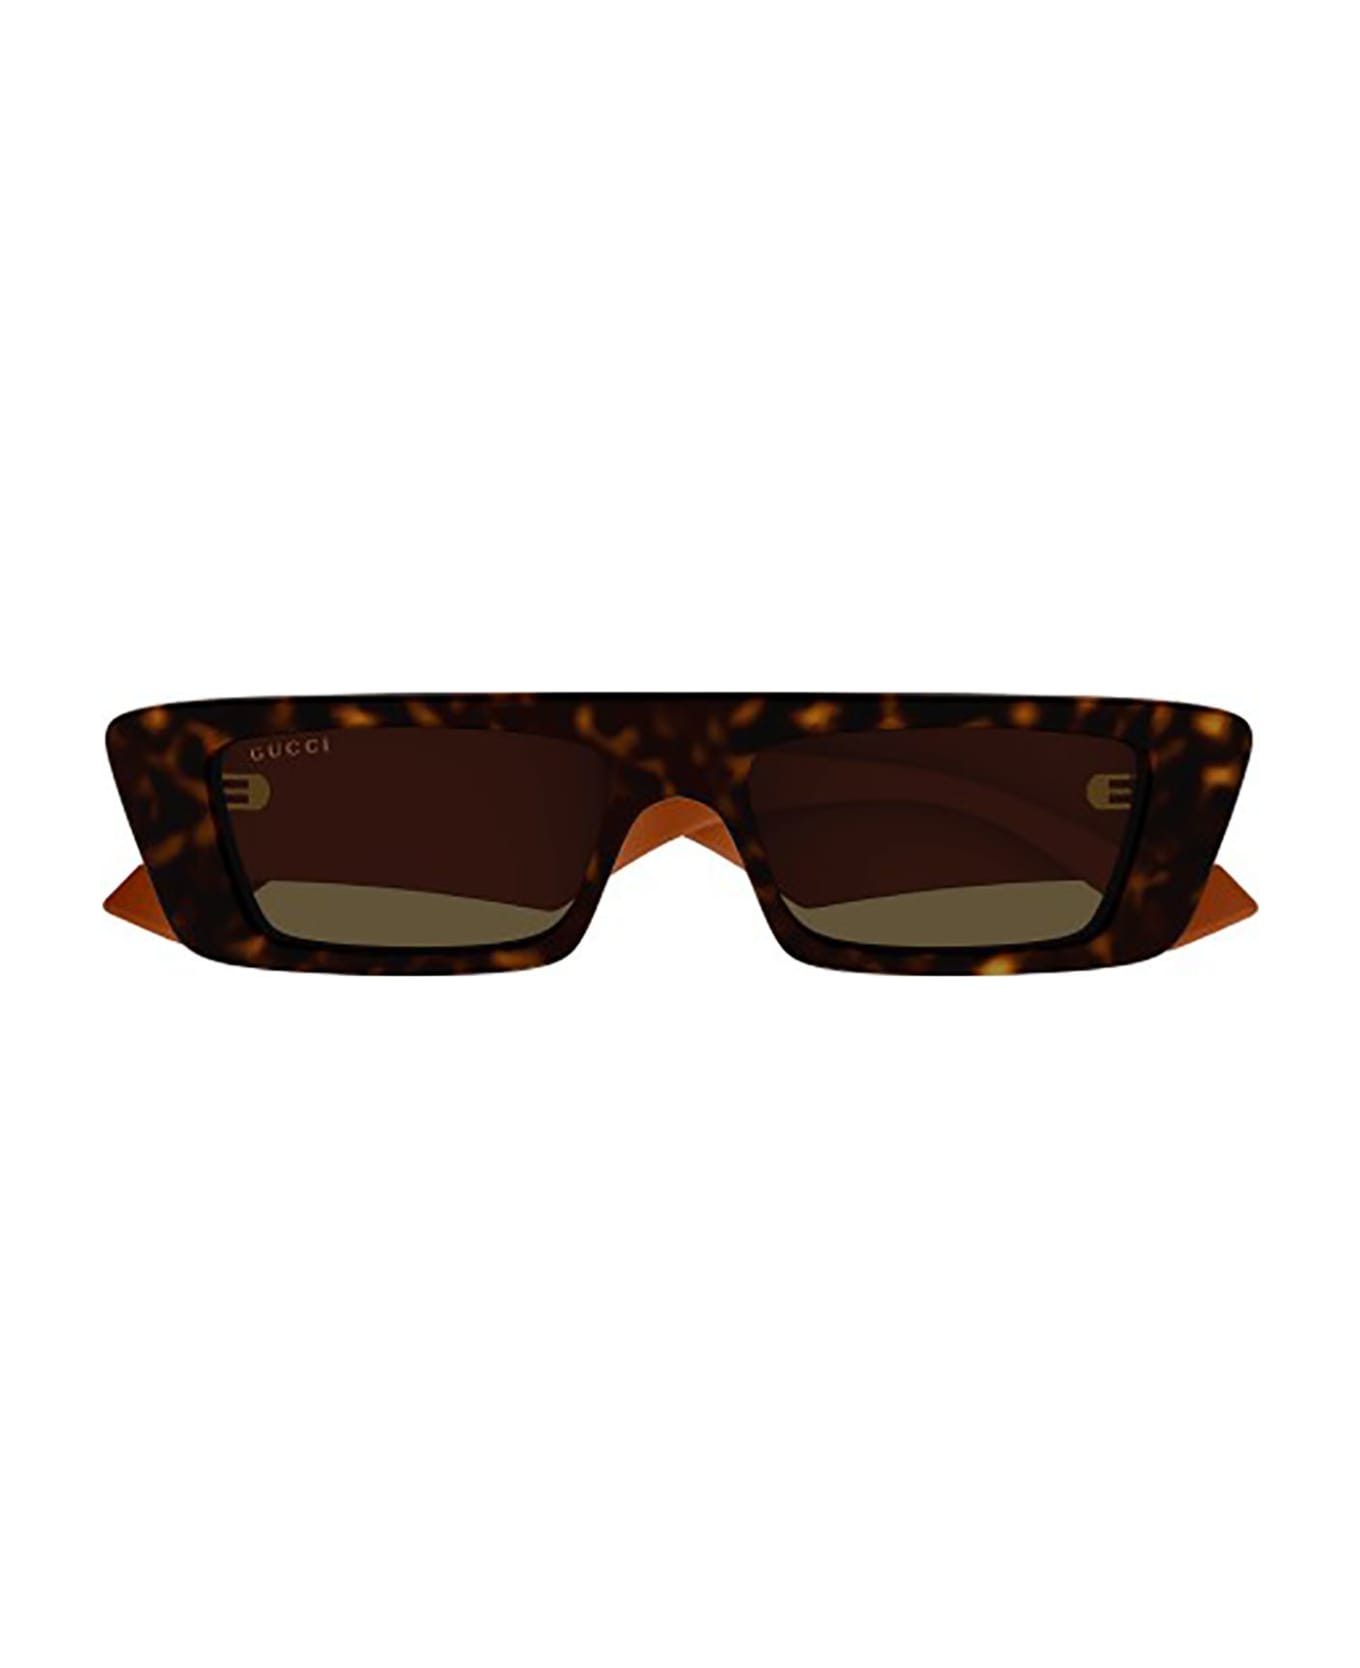 Gucci Eyewear GG1331S Sunglasses - Havana Orange Brown サングラス